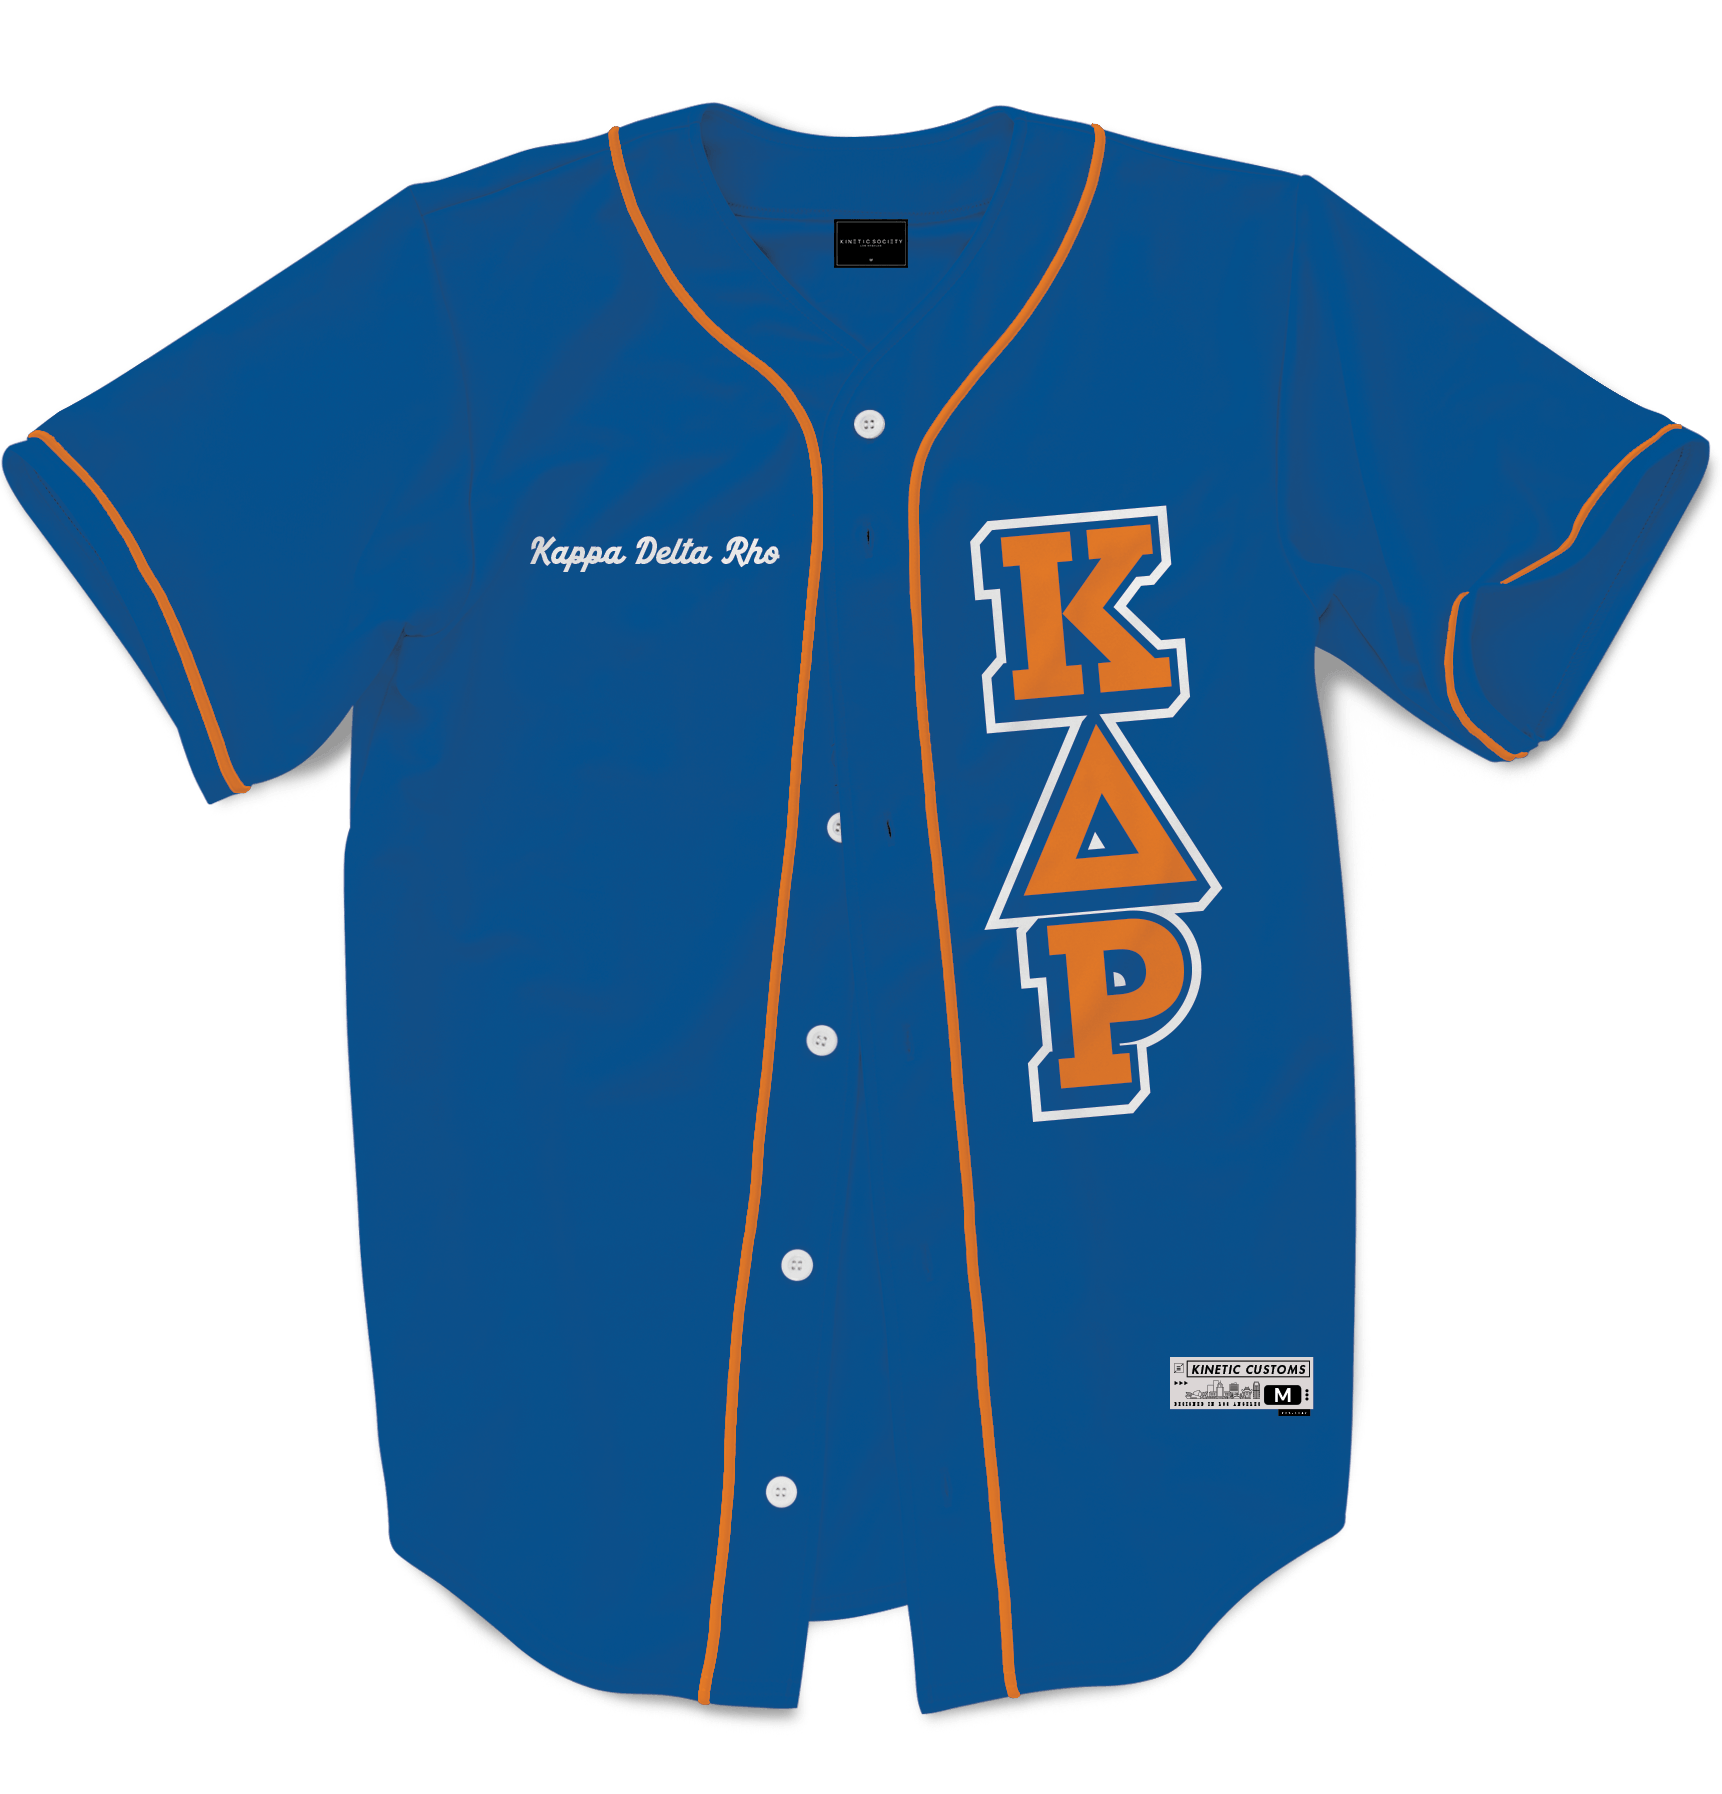 KAPPA DELTA RHO - The Block Baseball Jersey Premium Baseball Kinetic Society LLC 